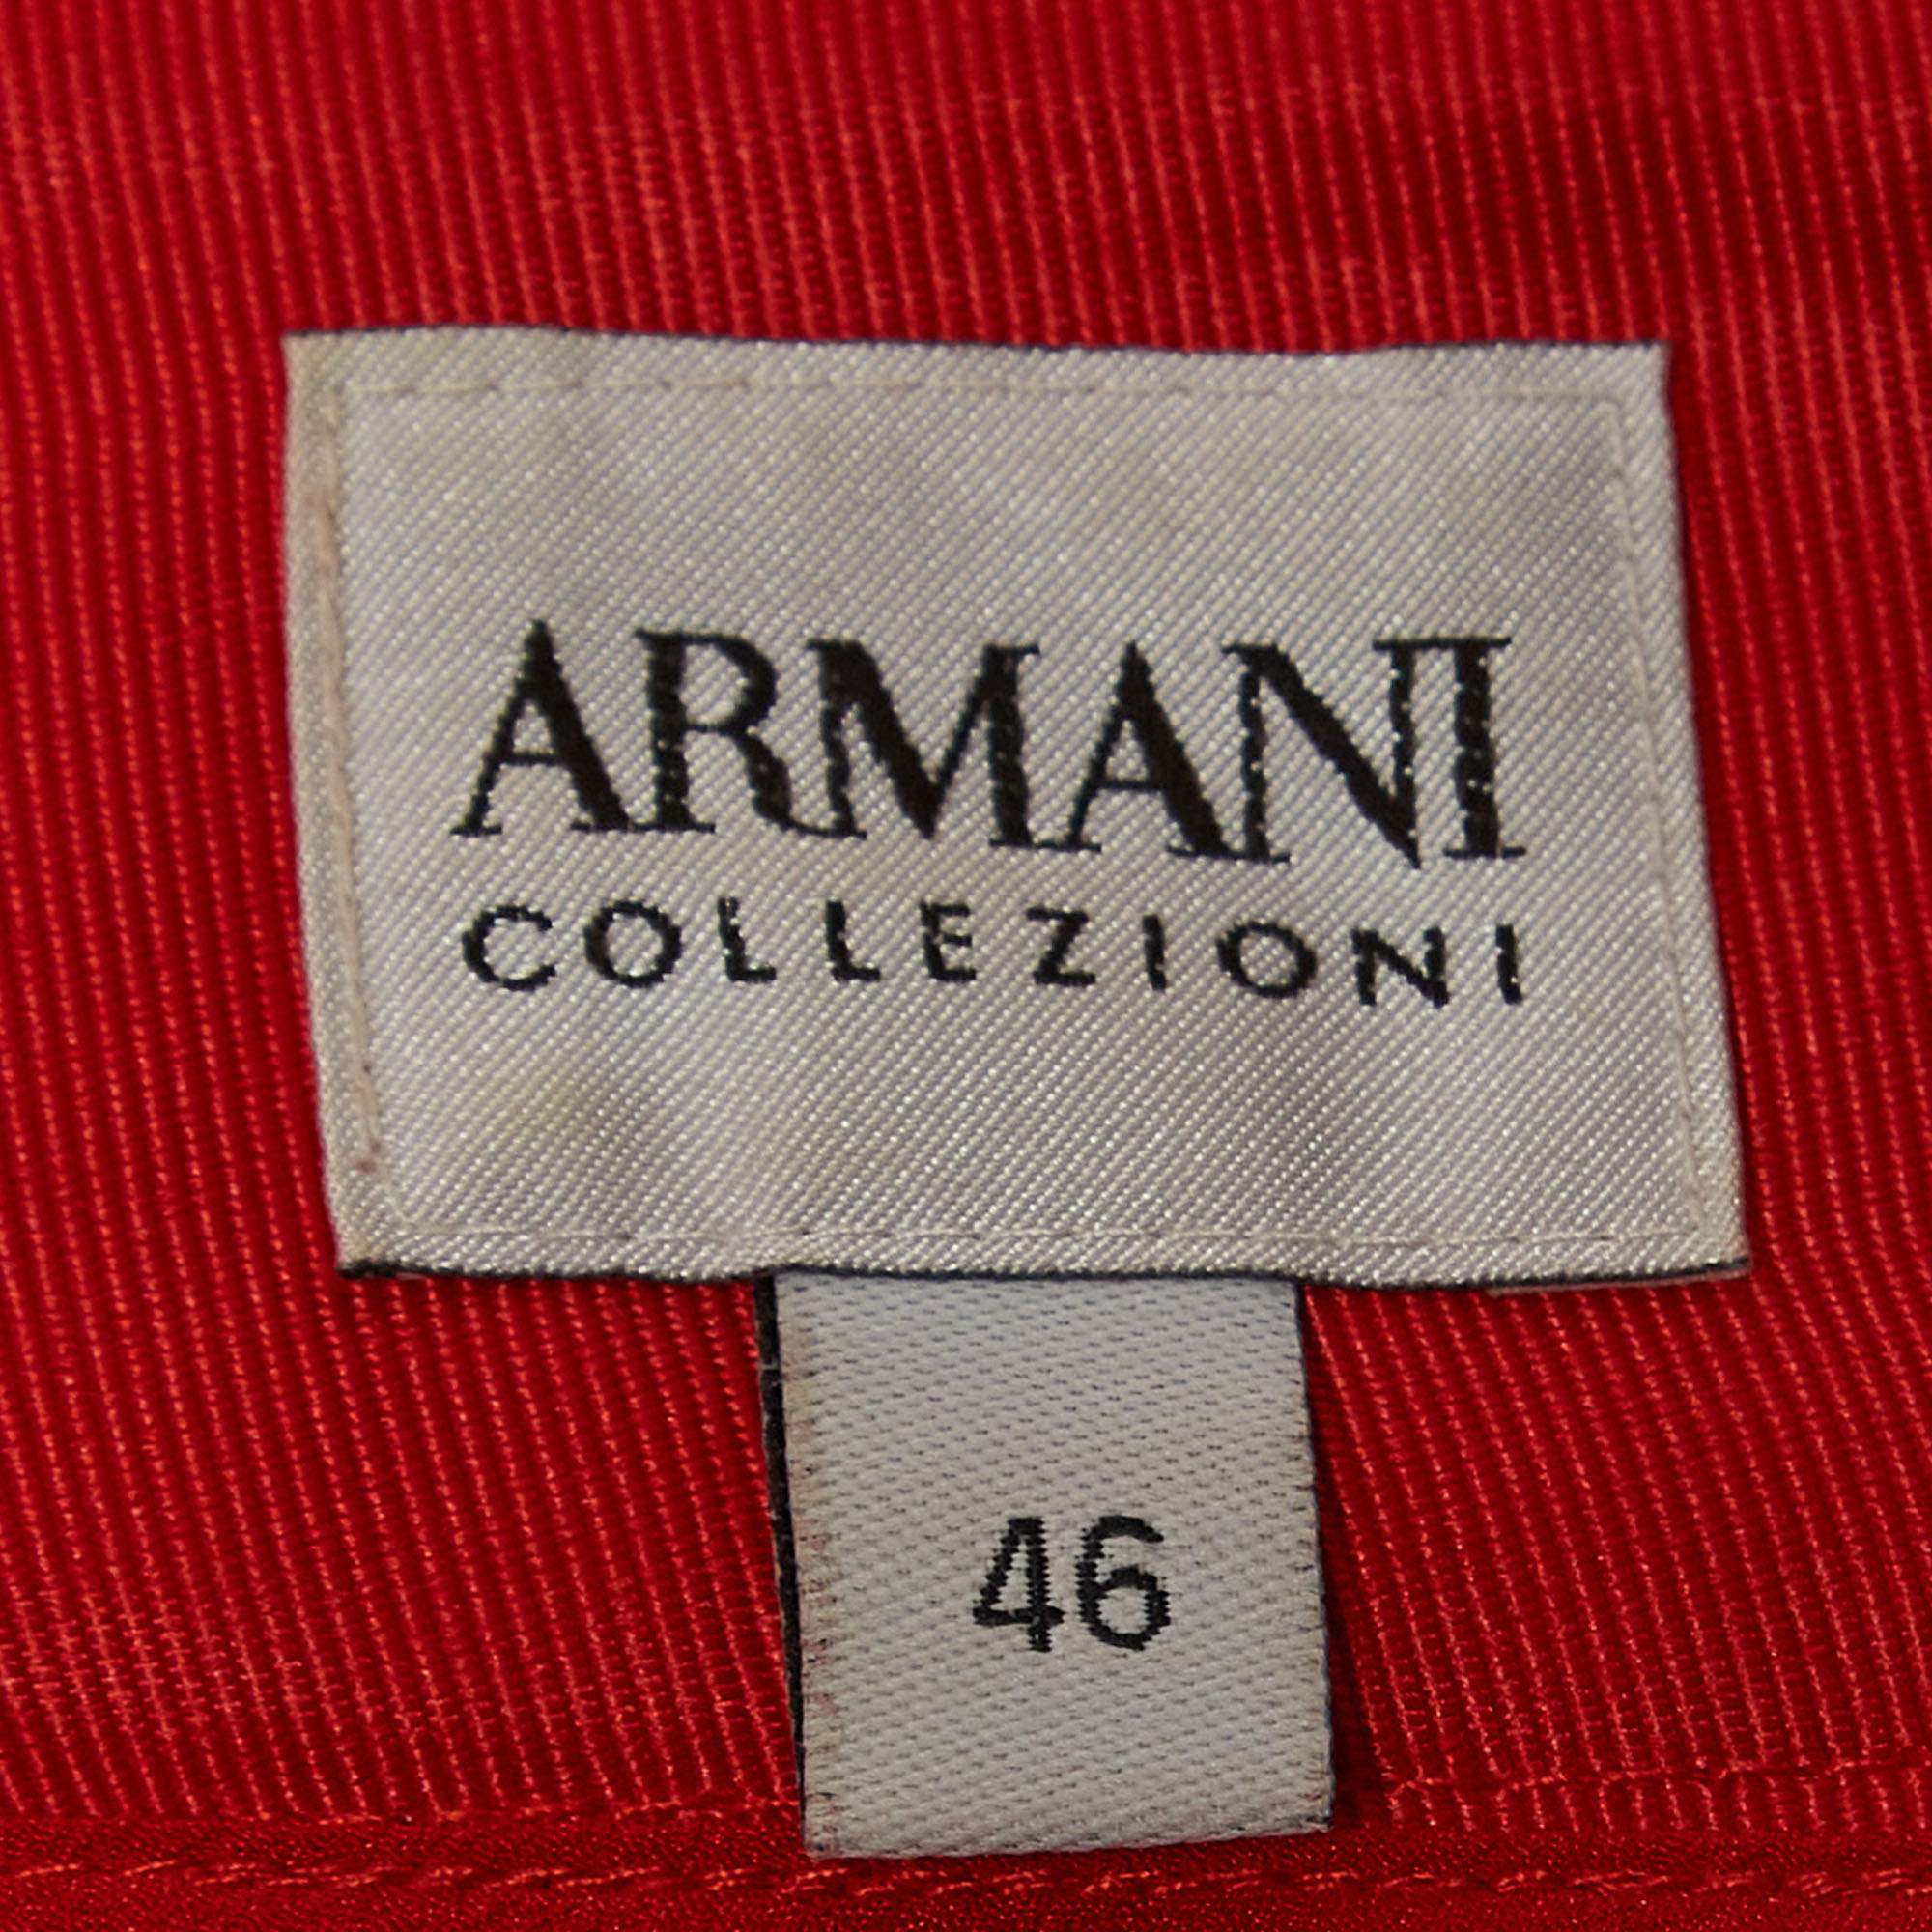 Armani Collezioni Red Knit Skirt And Blazer Set L